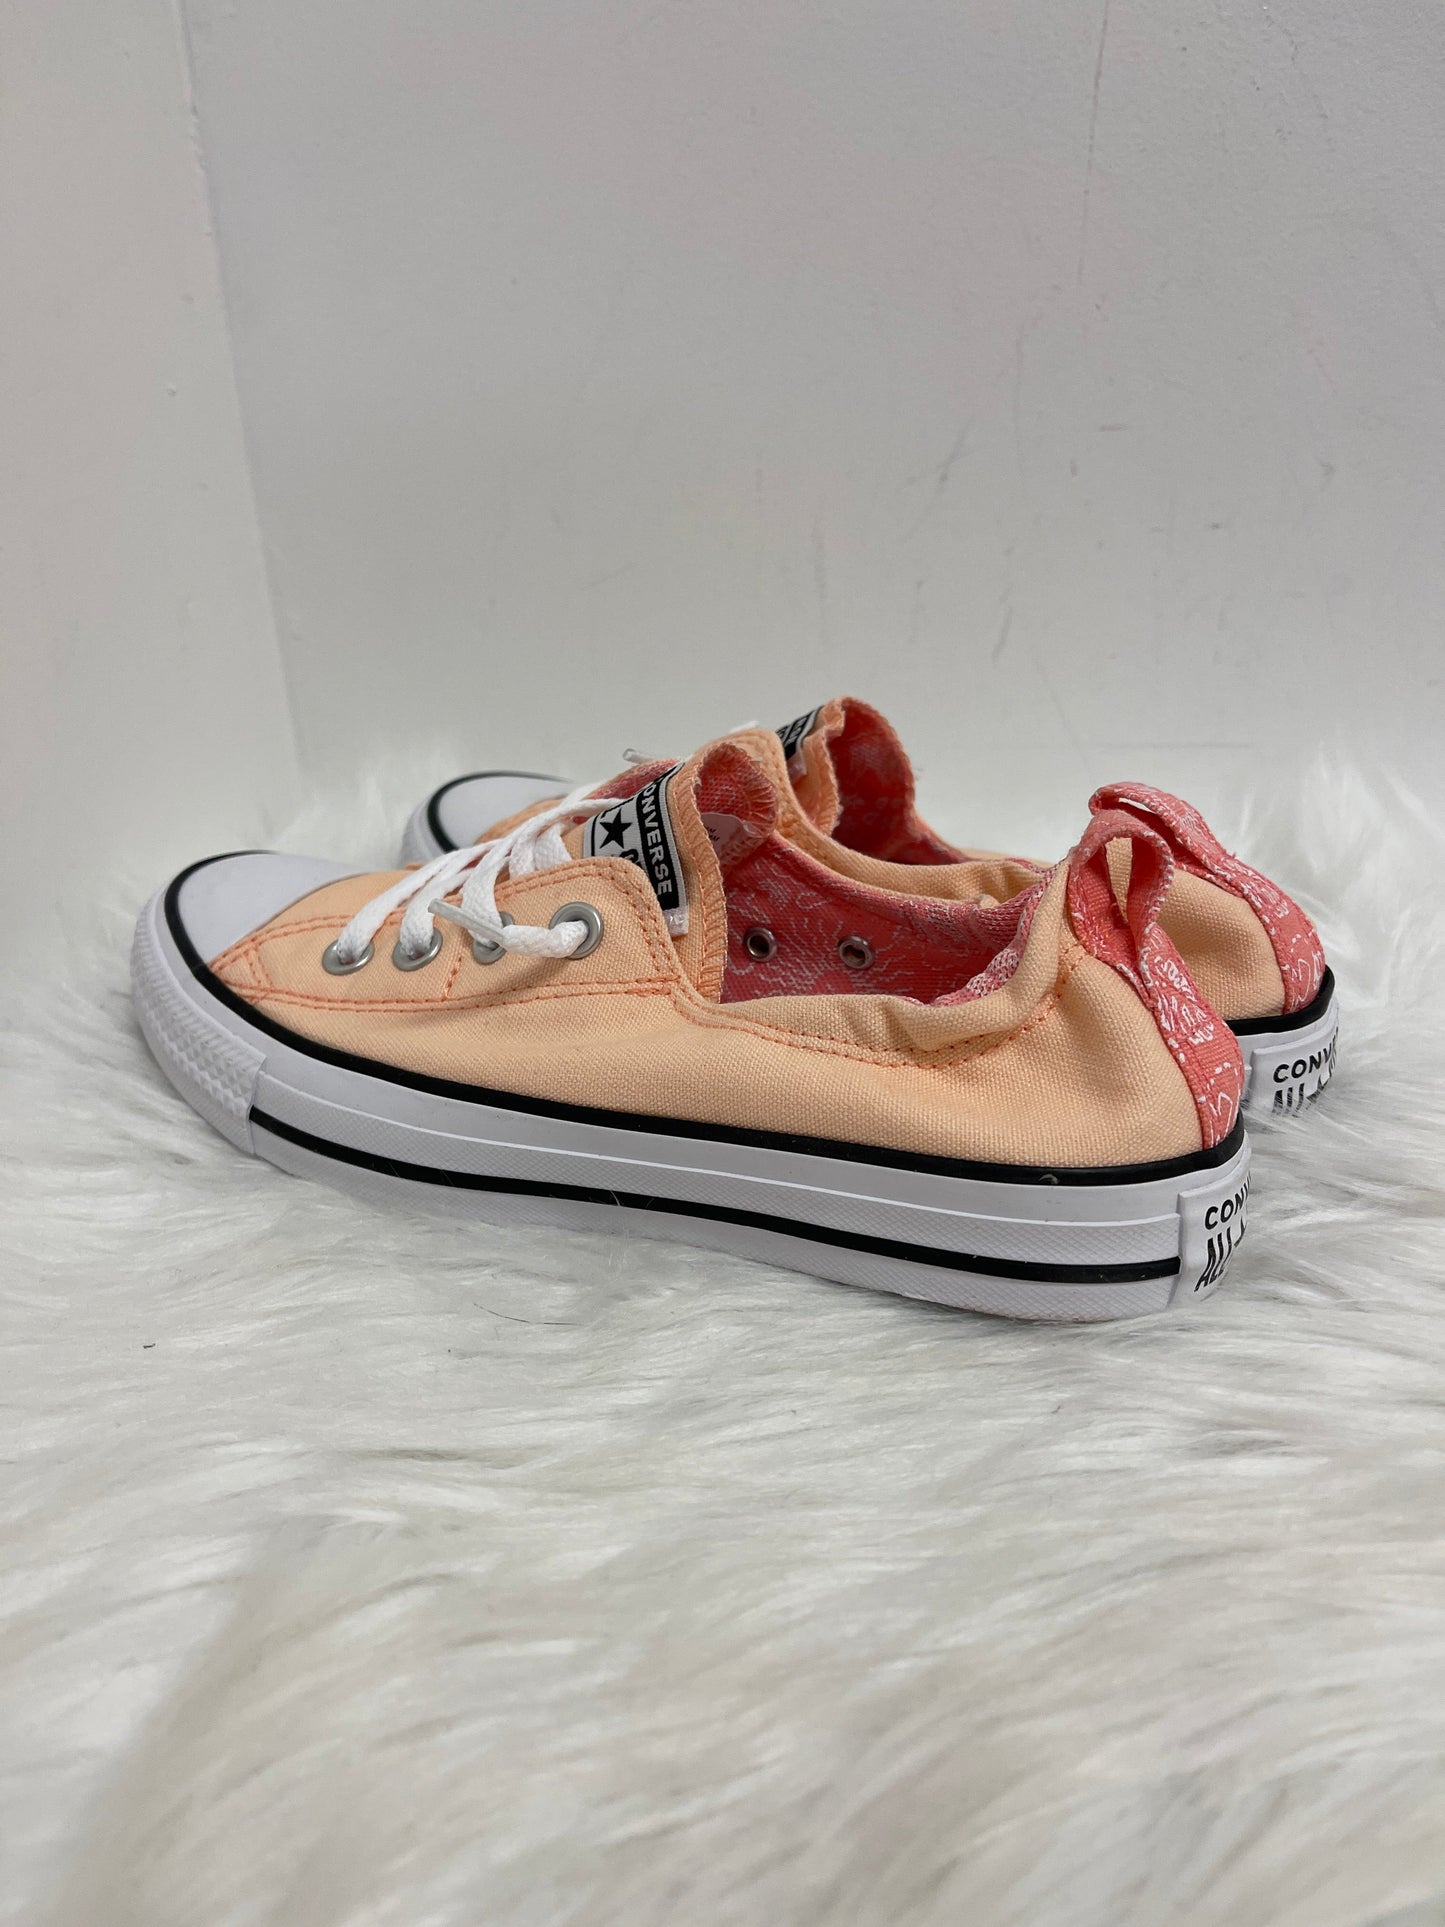 Orange Shoes Sneakers Converse, Size 8